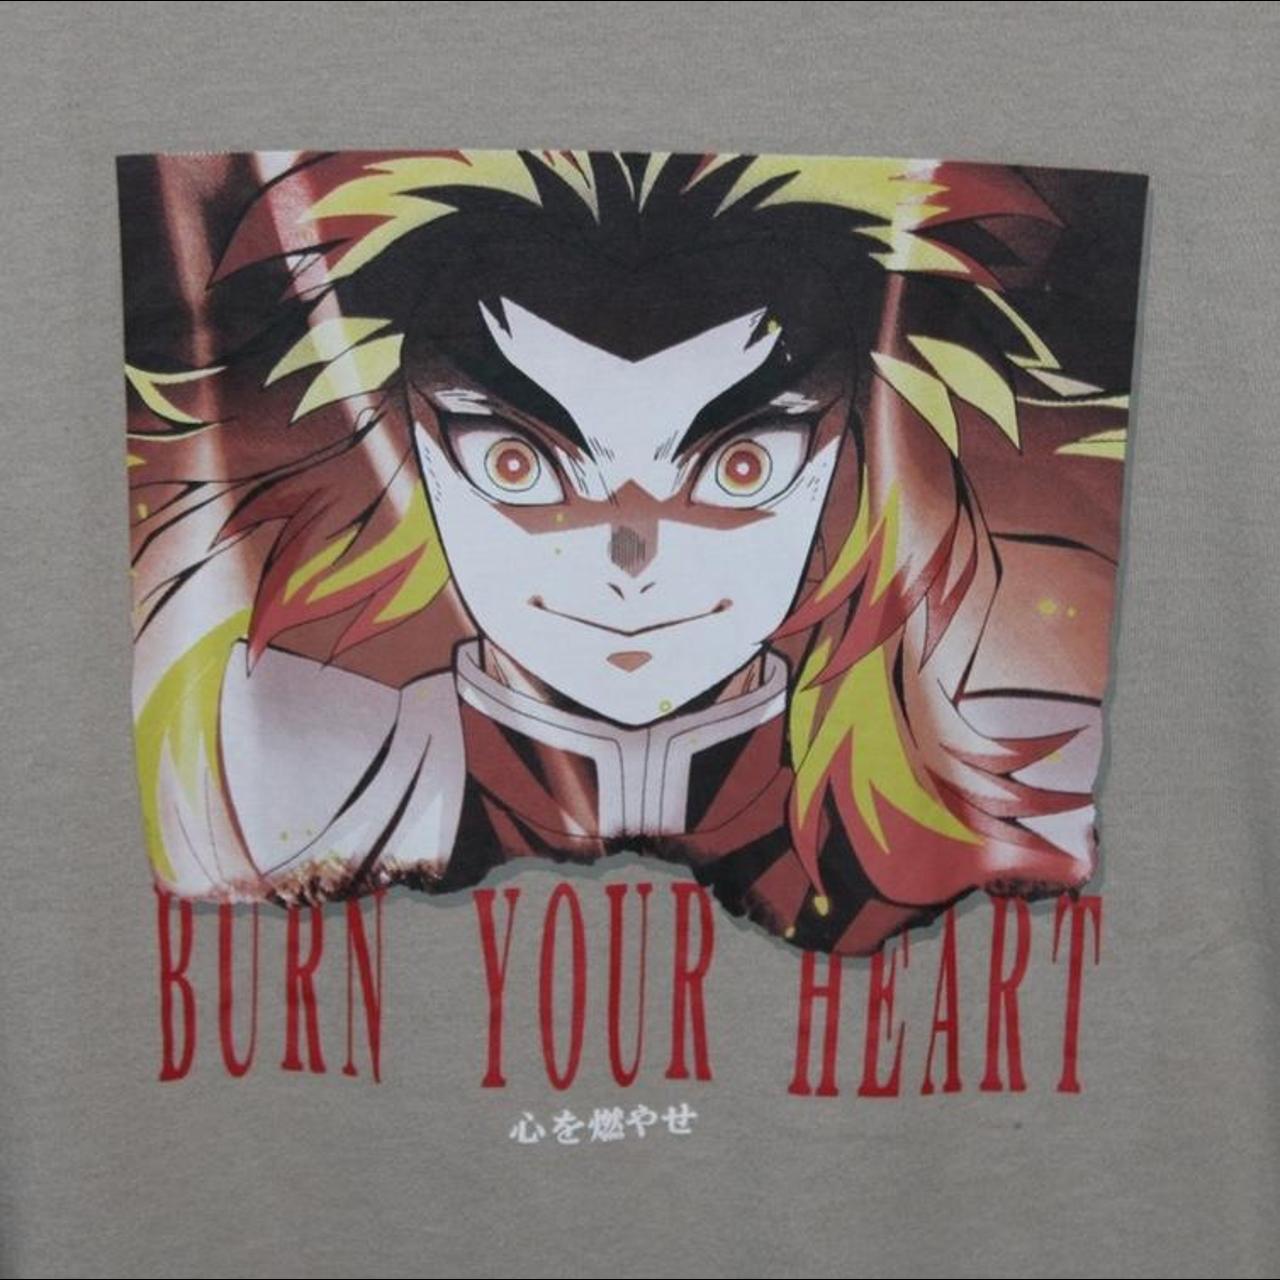 Demon Slayer “ Burn Your Heart “ Shirt - Depop